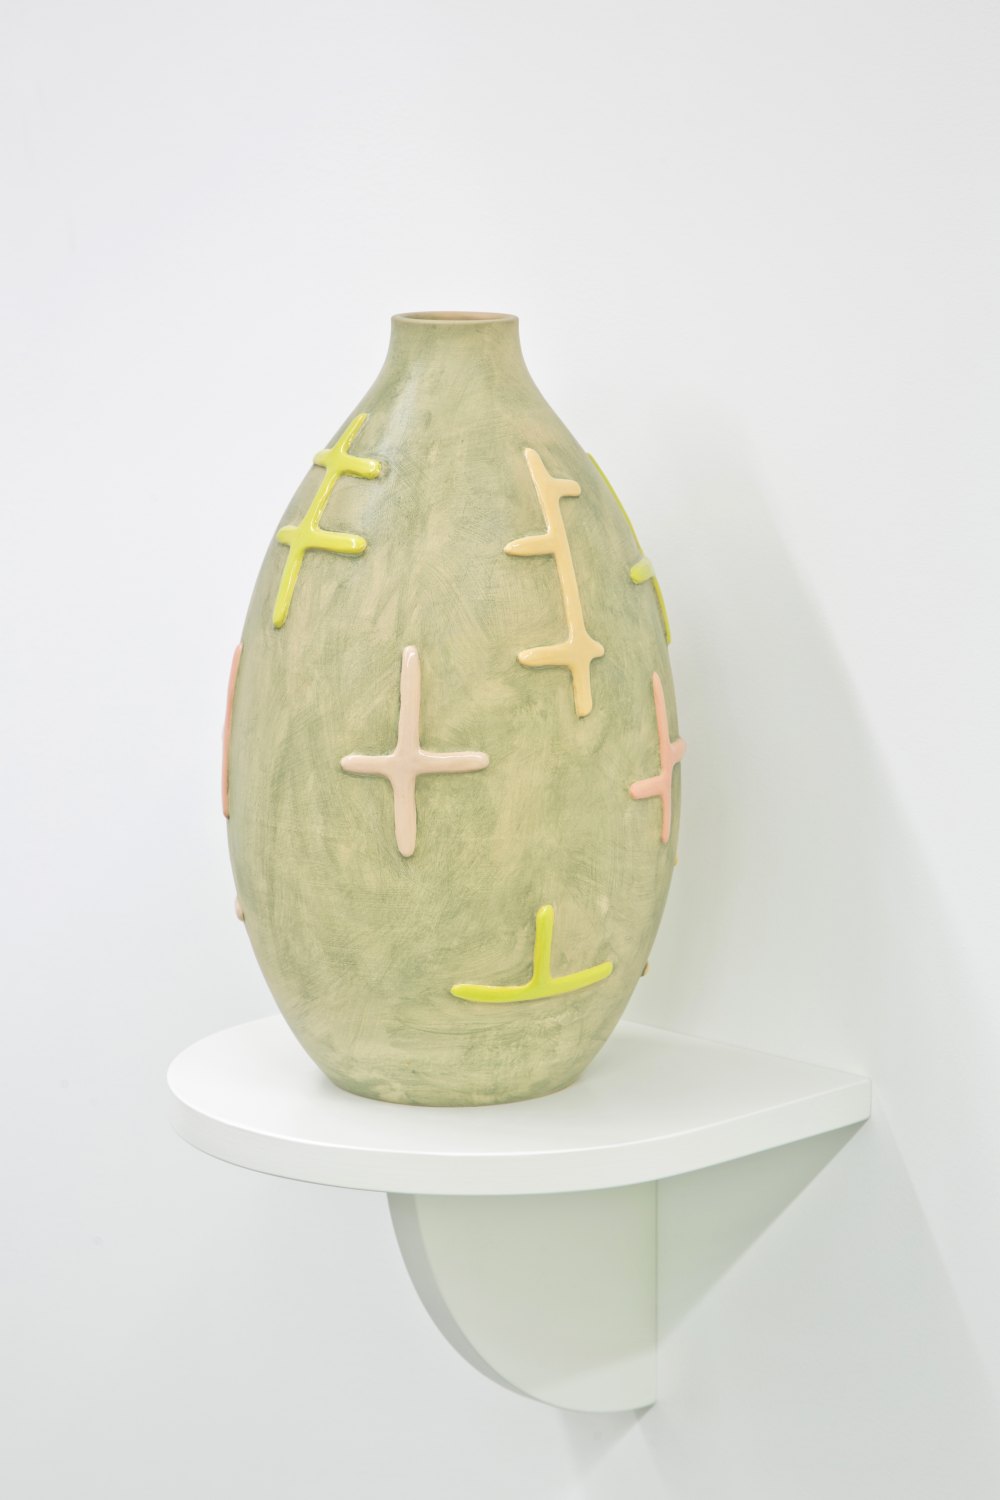 Marc Camille Chaimowicz Plum vase, 2014 Glazed ceramic, 43 cm × ∅ 22 cm